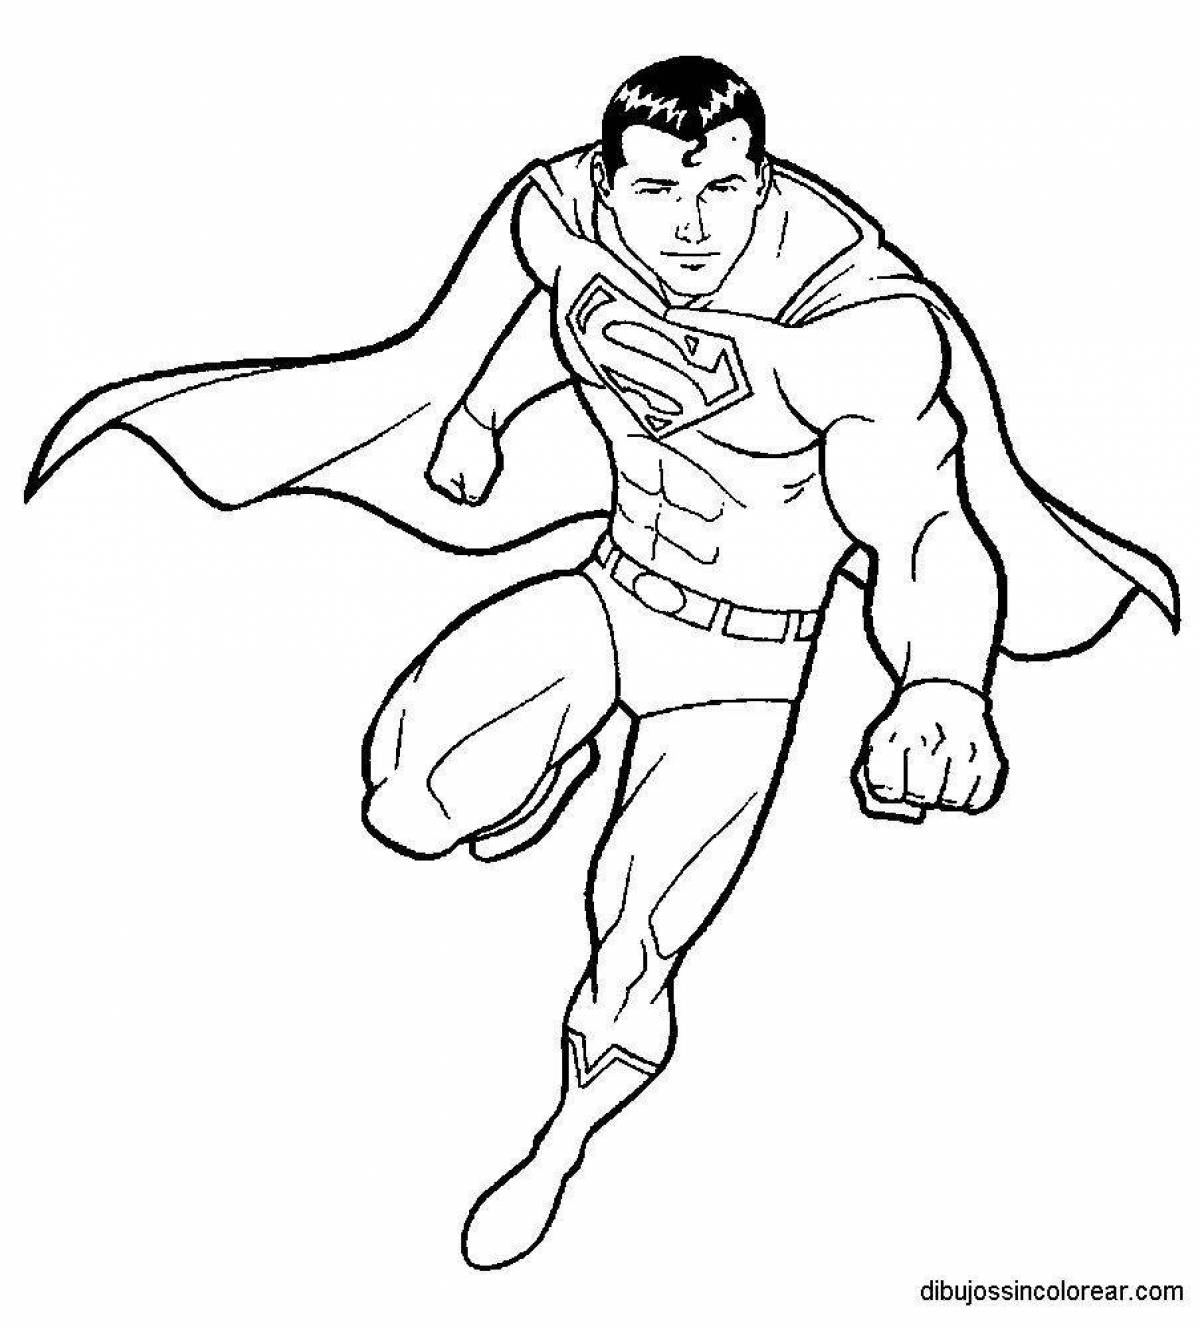 Superman glamor coloring book